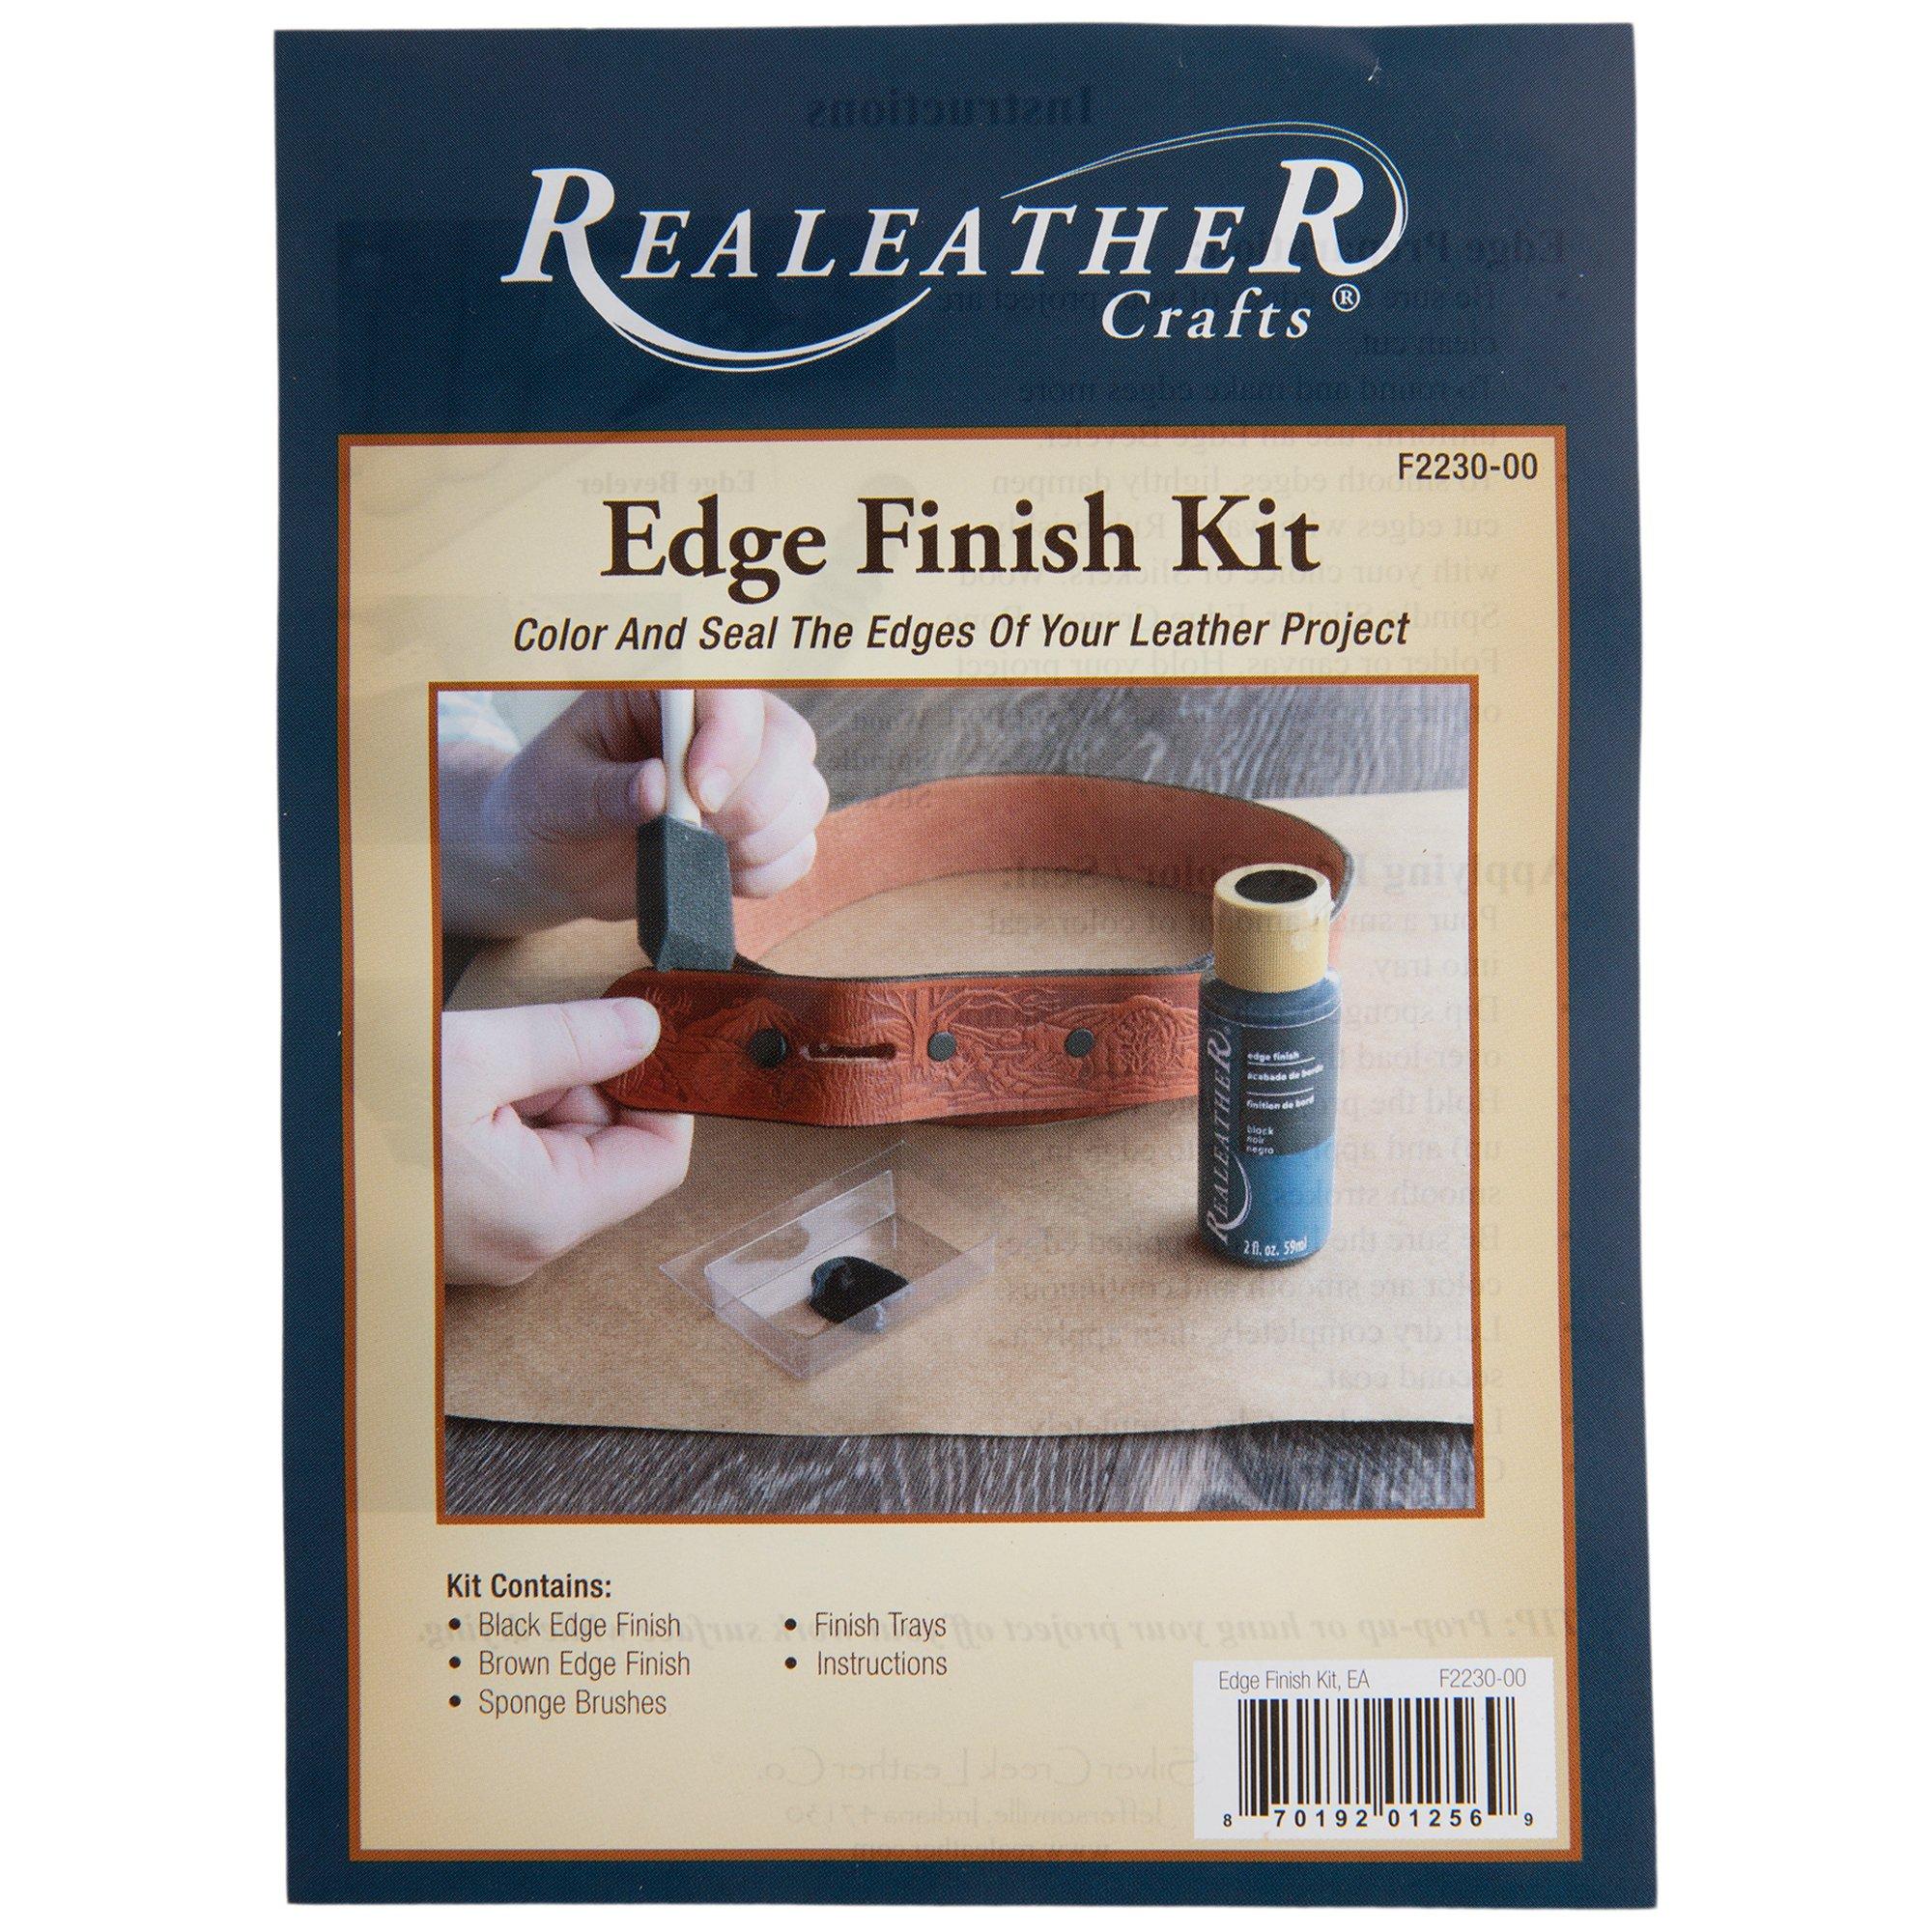 Problems with edge finishing? : r/Leathercraft